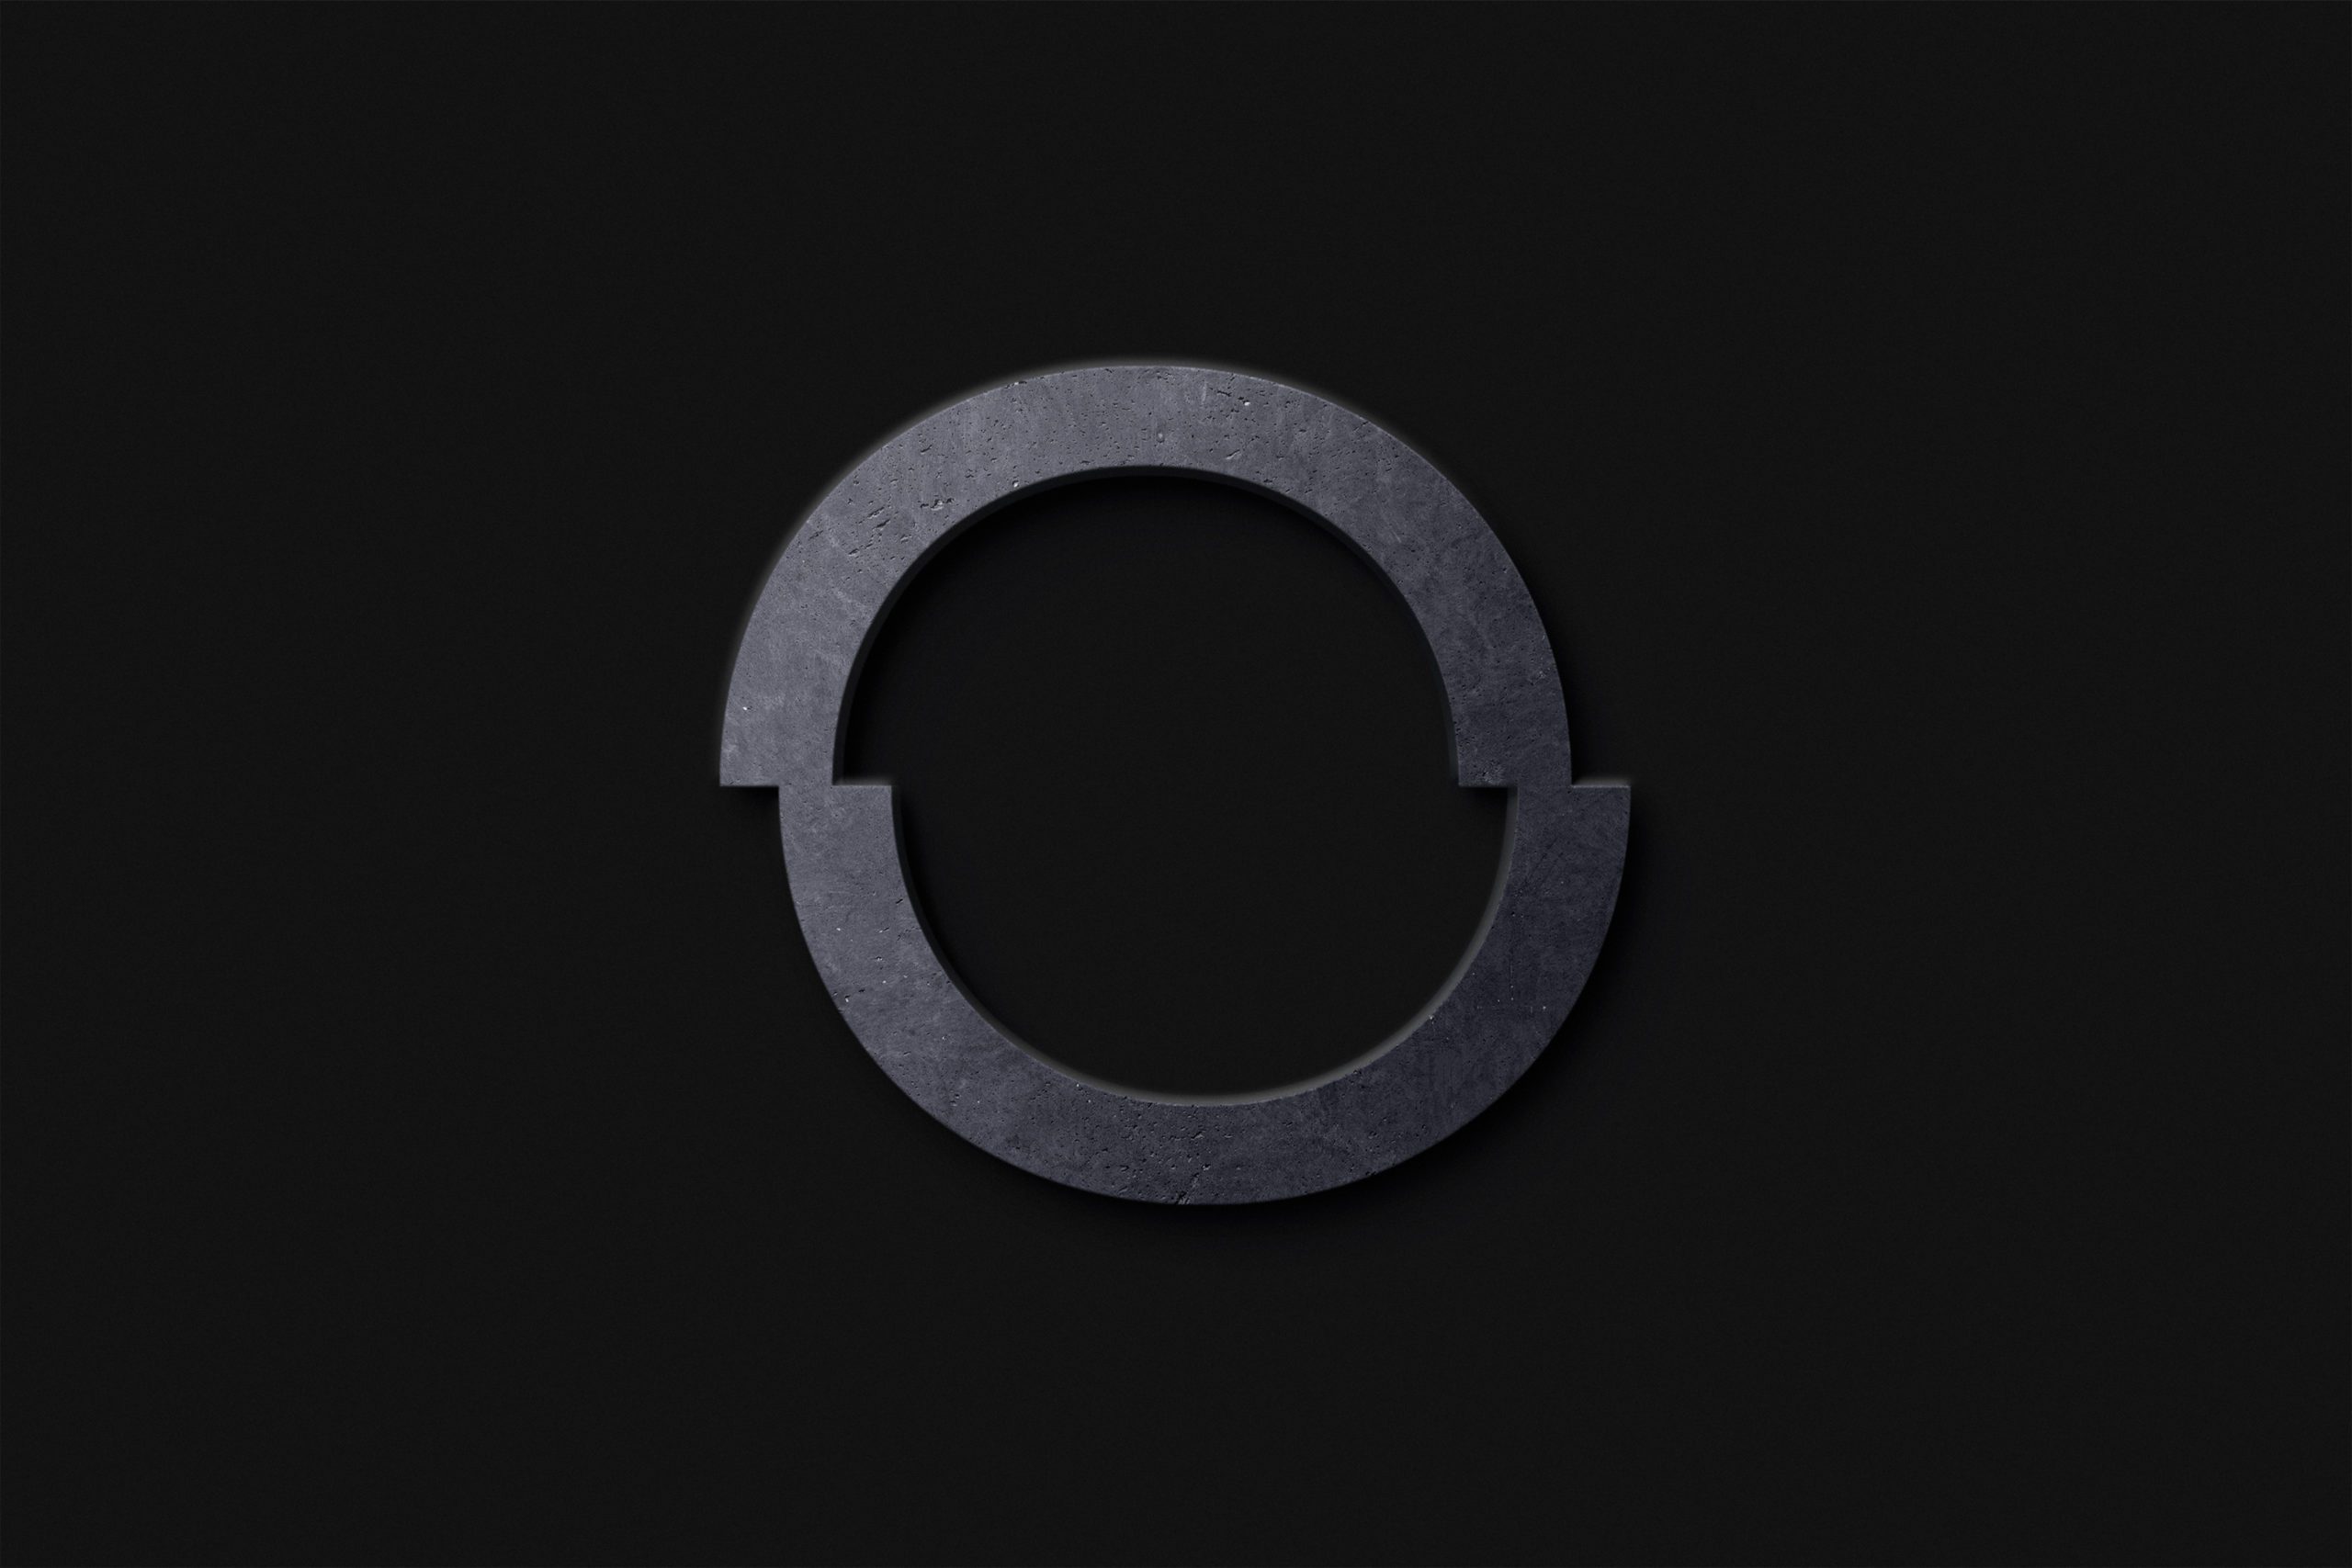 Chiron Partners 3D logo on black